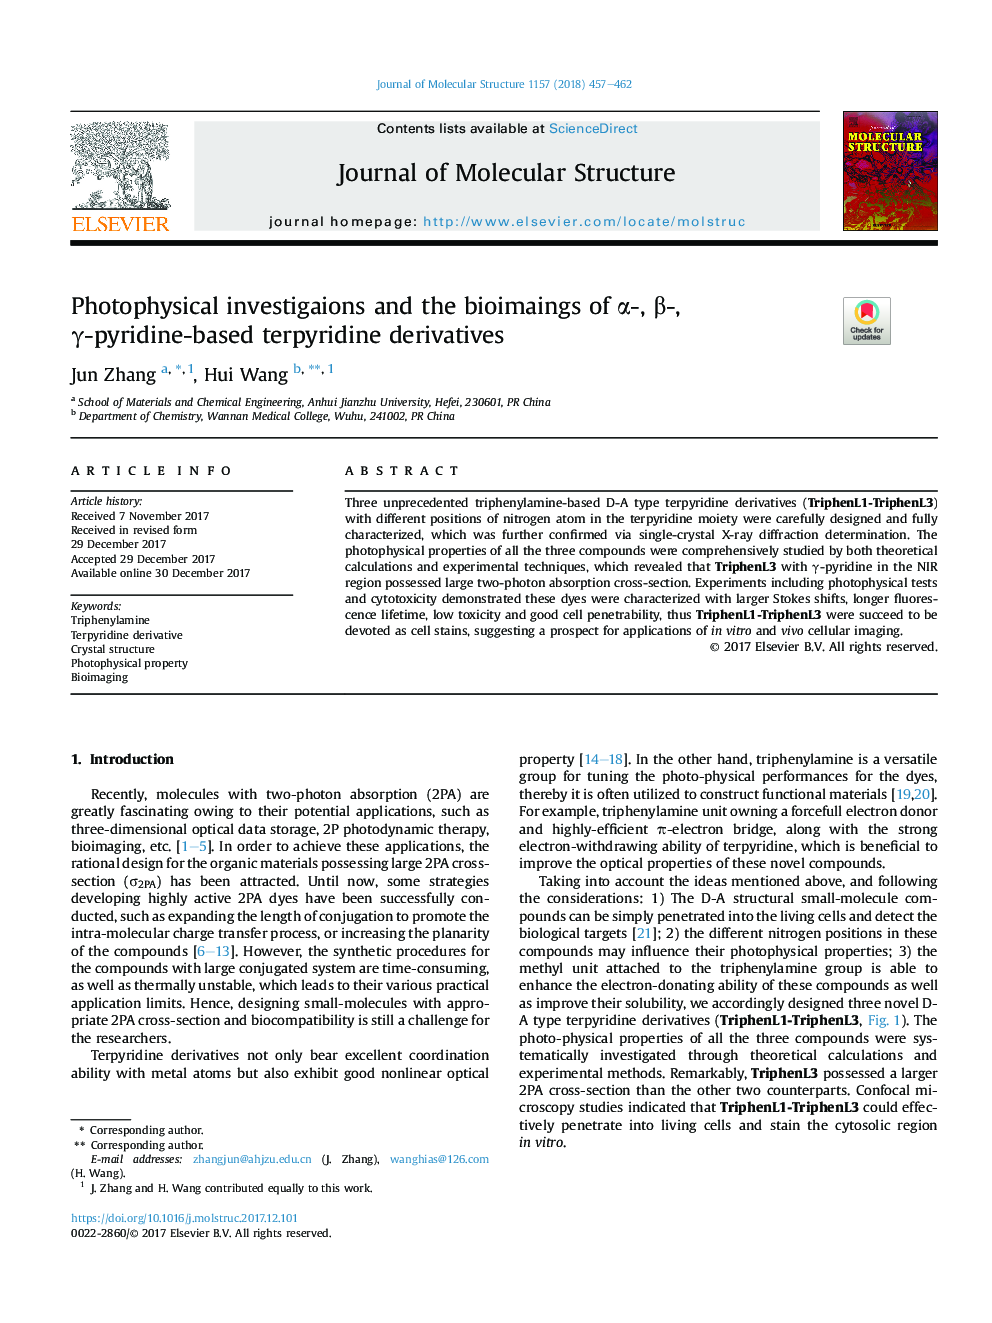 Photophysical investigaions and the bioimaings of Î±-, Î²-, Î³-pyridine-based terpyridine derivatives